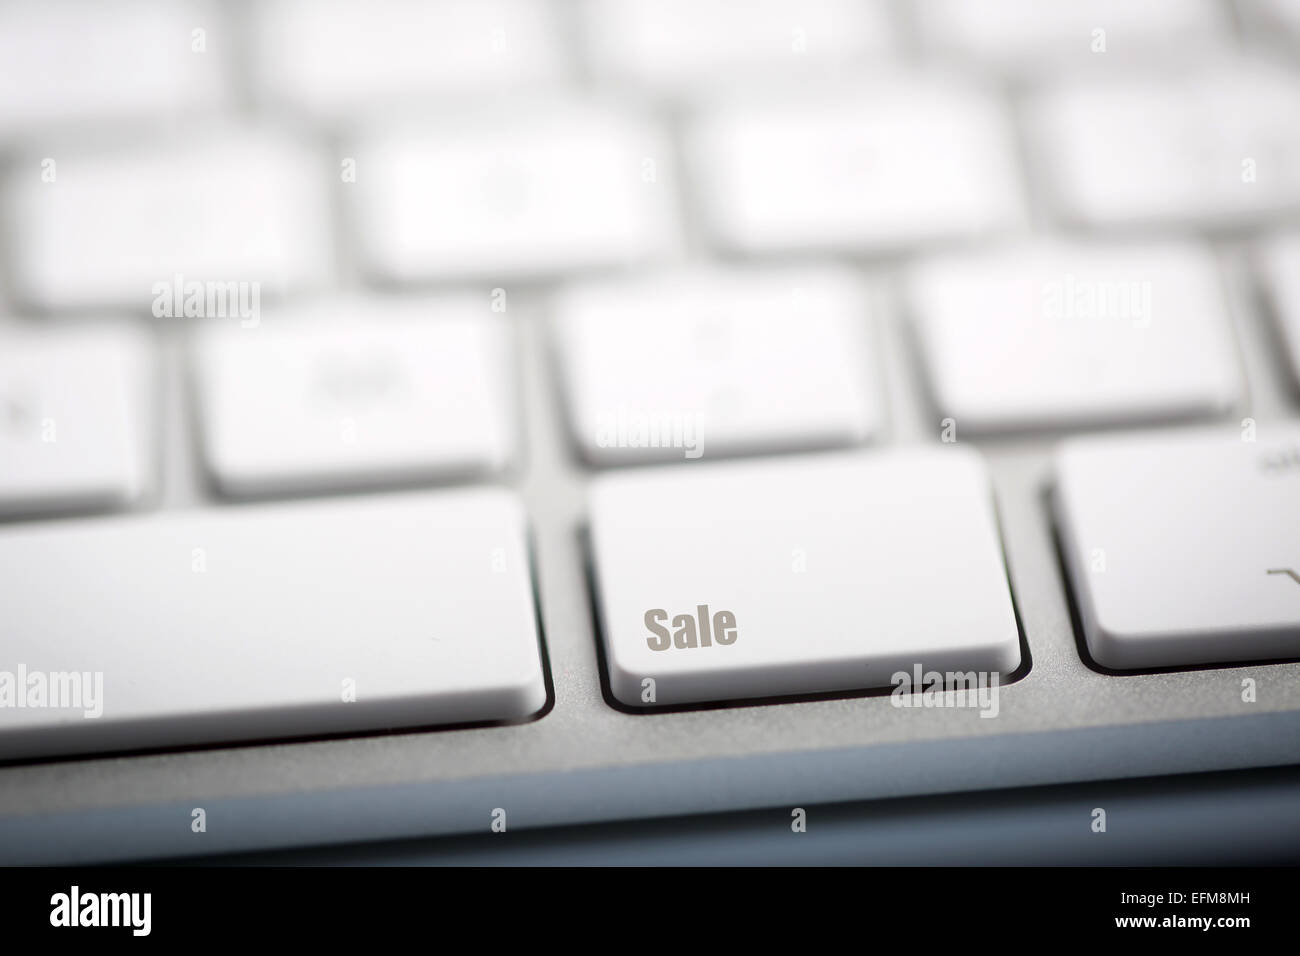 The word 'SALE' written on metallic keyboard Stock Photo